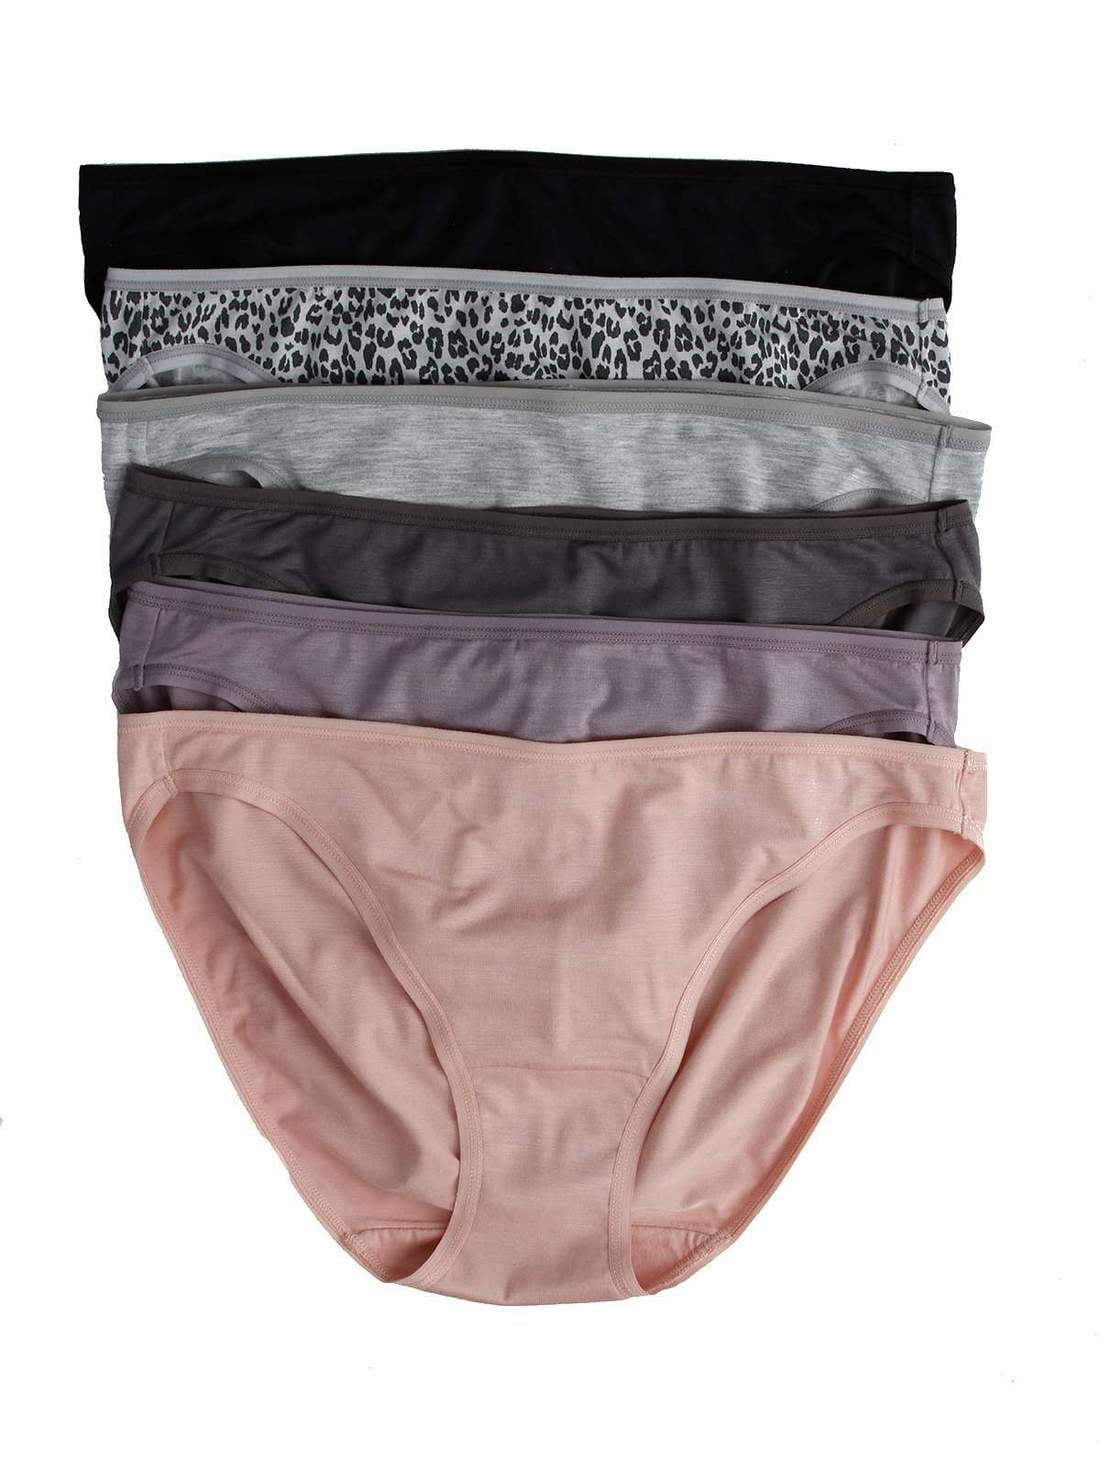 FelinaSo Smooth Modal Low Rise BikiniPanties6 Pack 